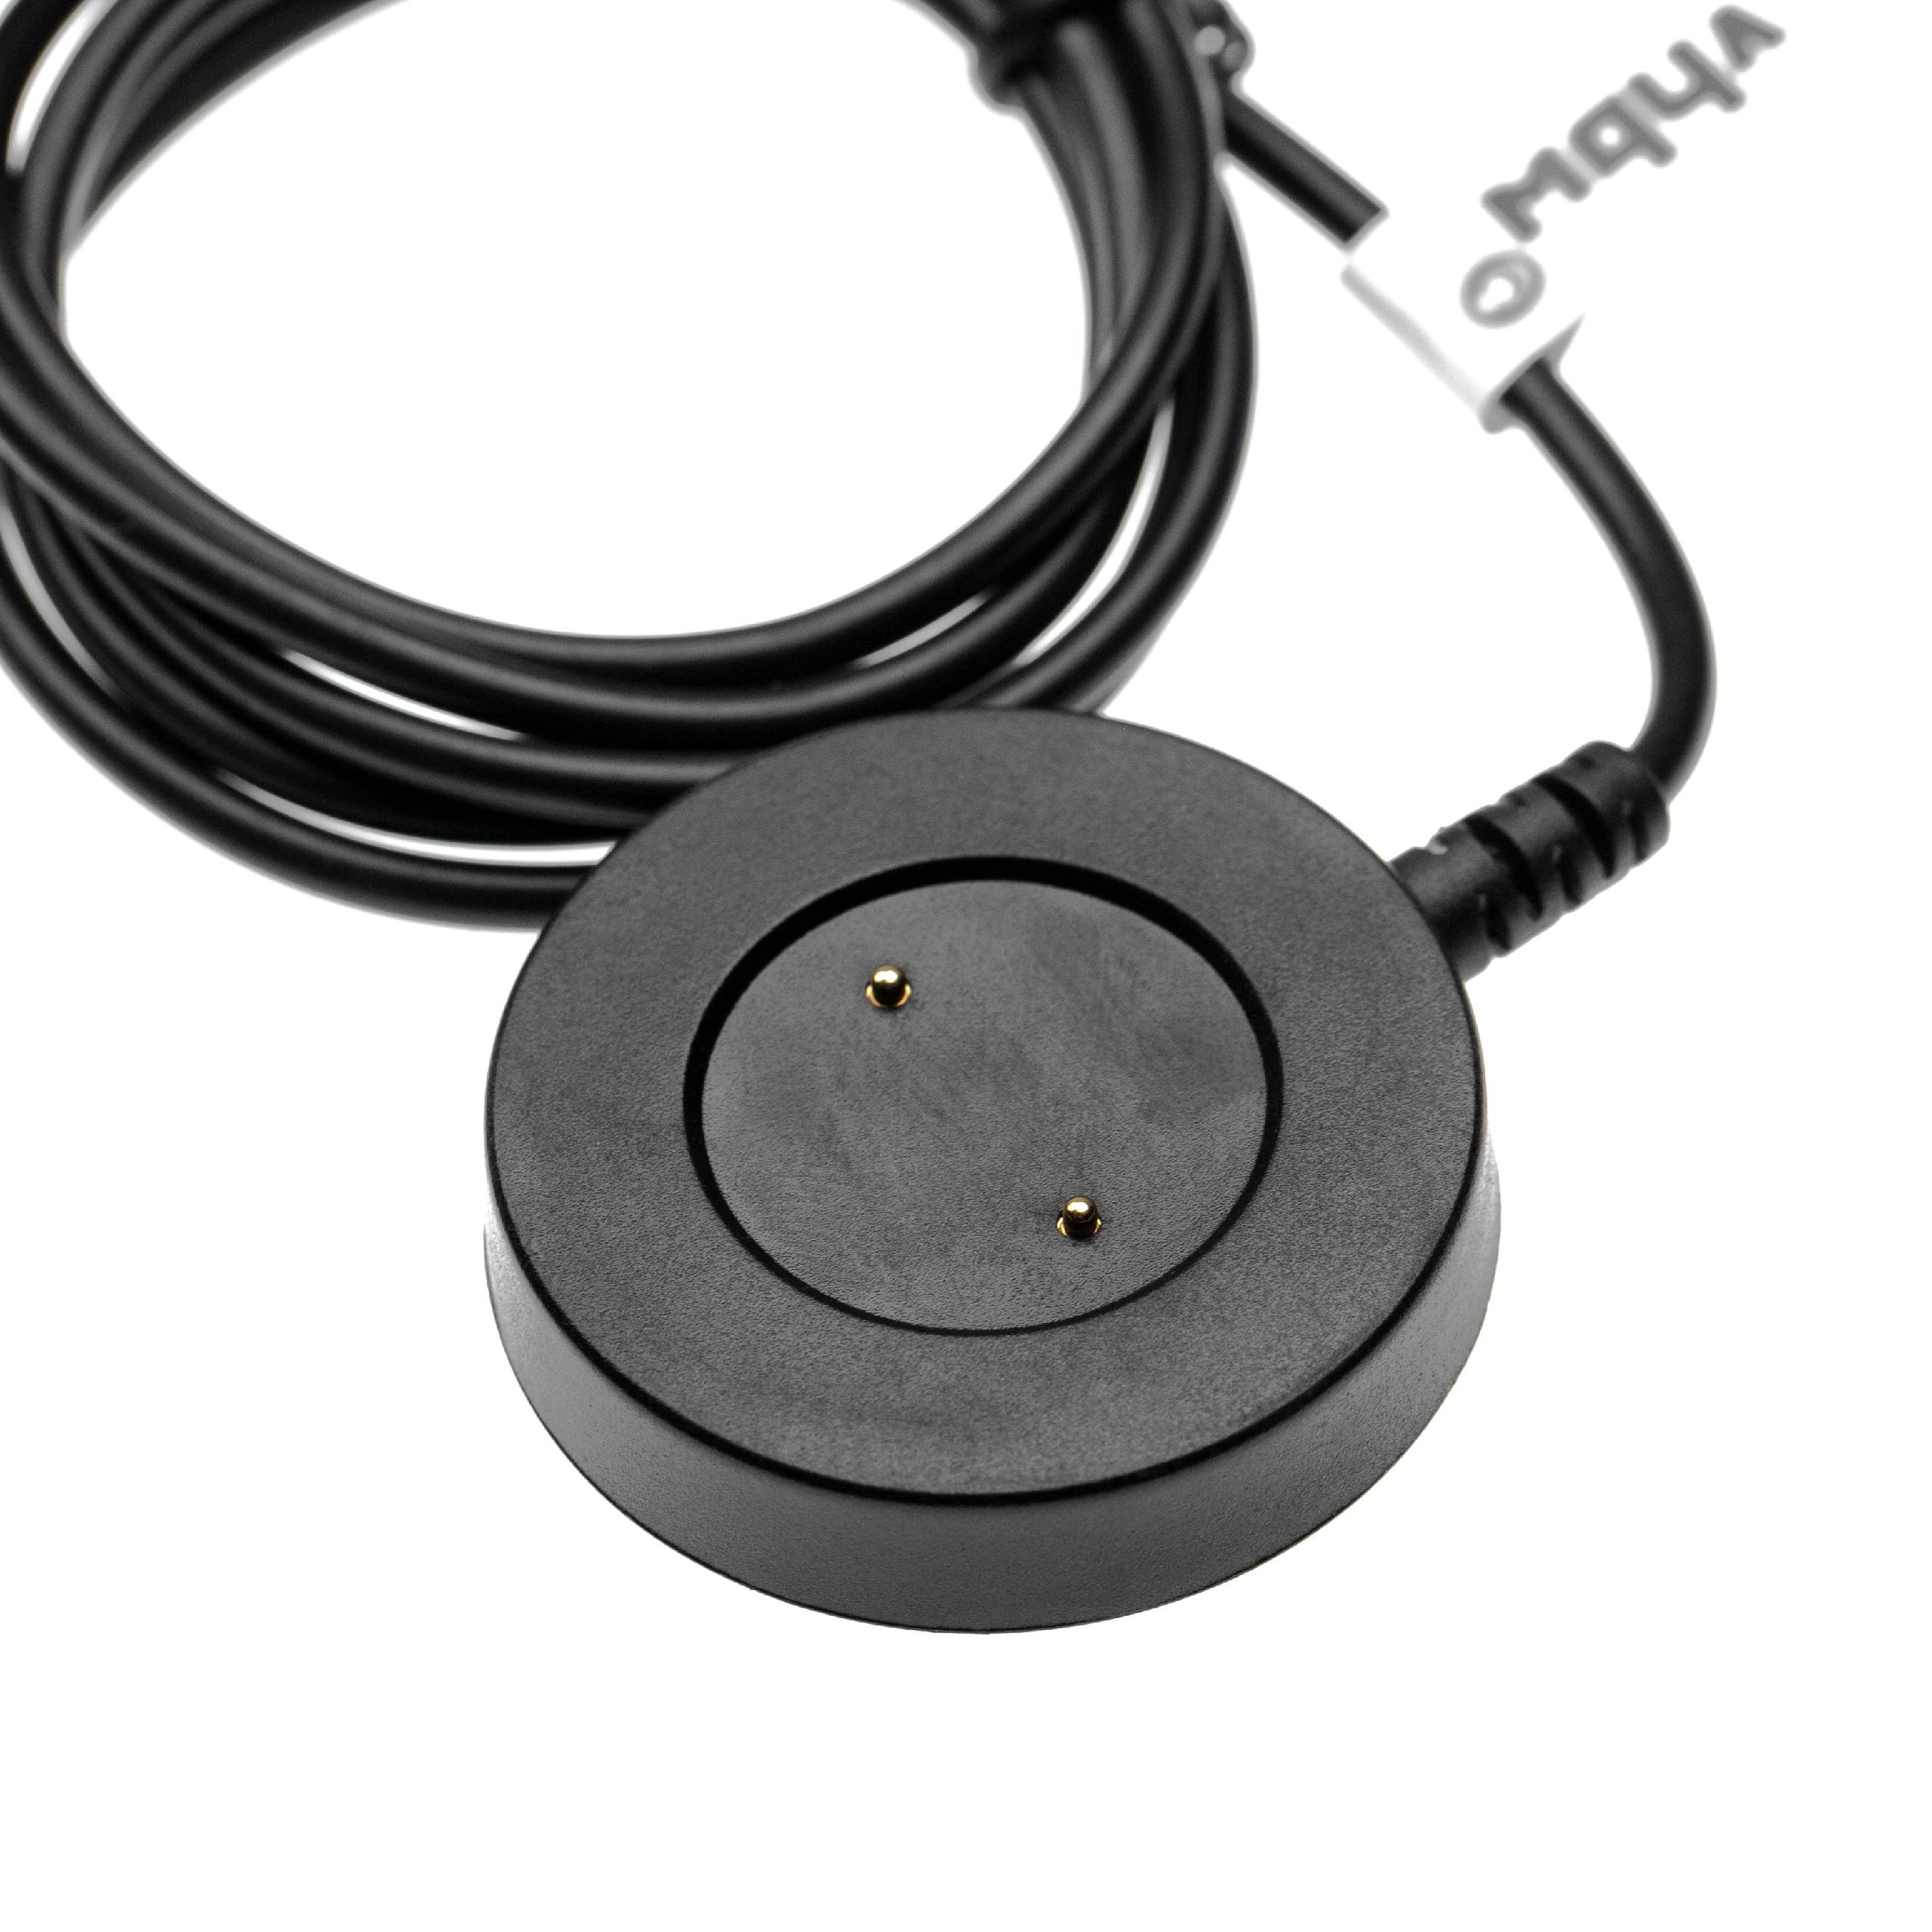 Cable de carga USB para smartwatch Huawei Watch GT2 - negro magnético 98 cm